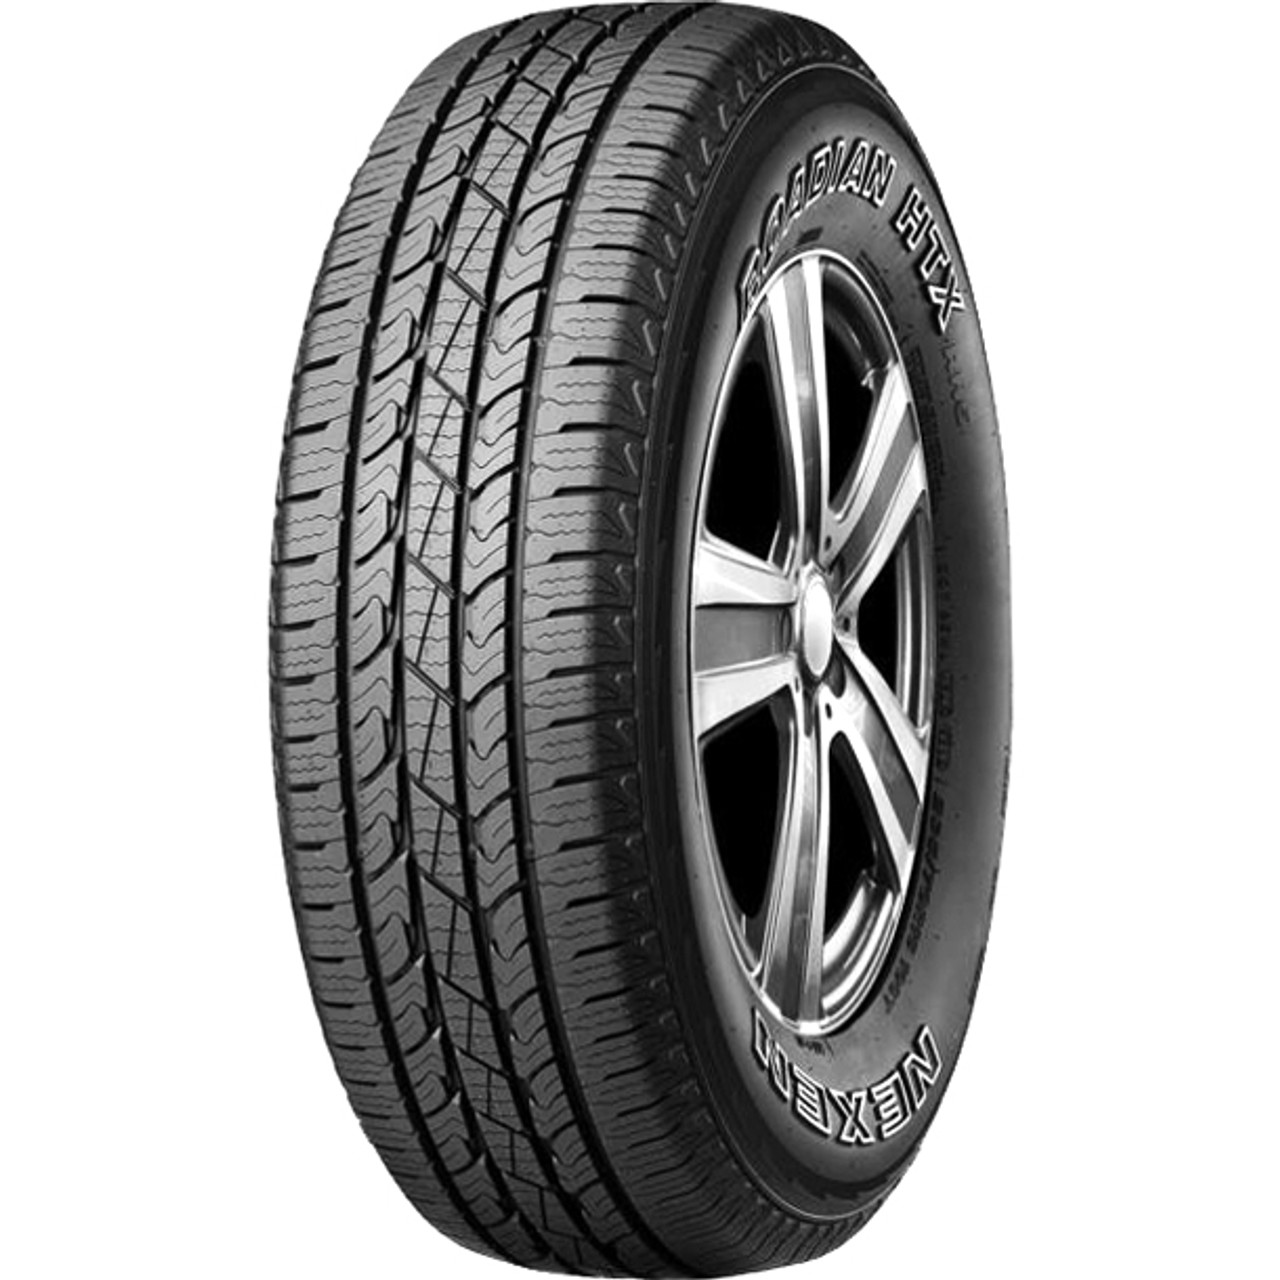 Nexen Roadian HTX RH5 Radial Tire 255/65R17 110S 